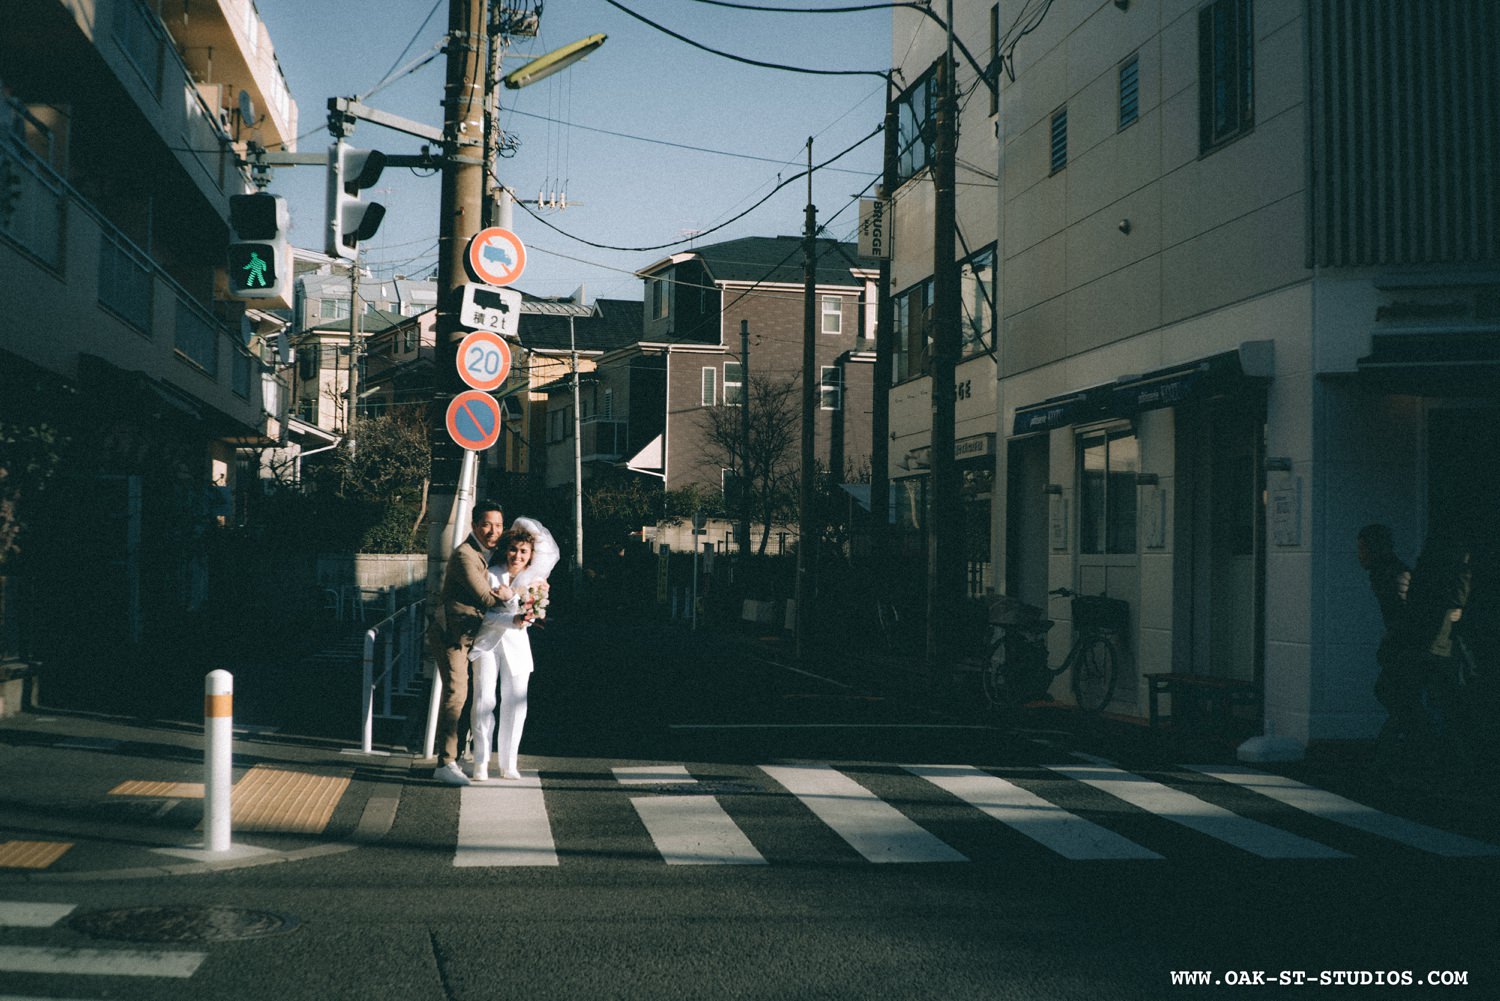 Oak St Studios - KZ Tandingan and TJ Monterde Prenup Engagement Photographer Tokyo Japan